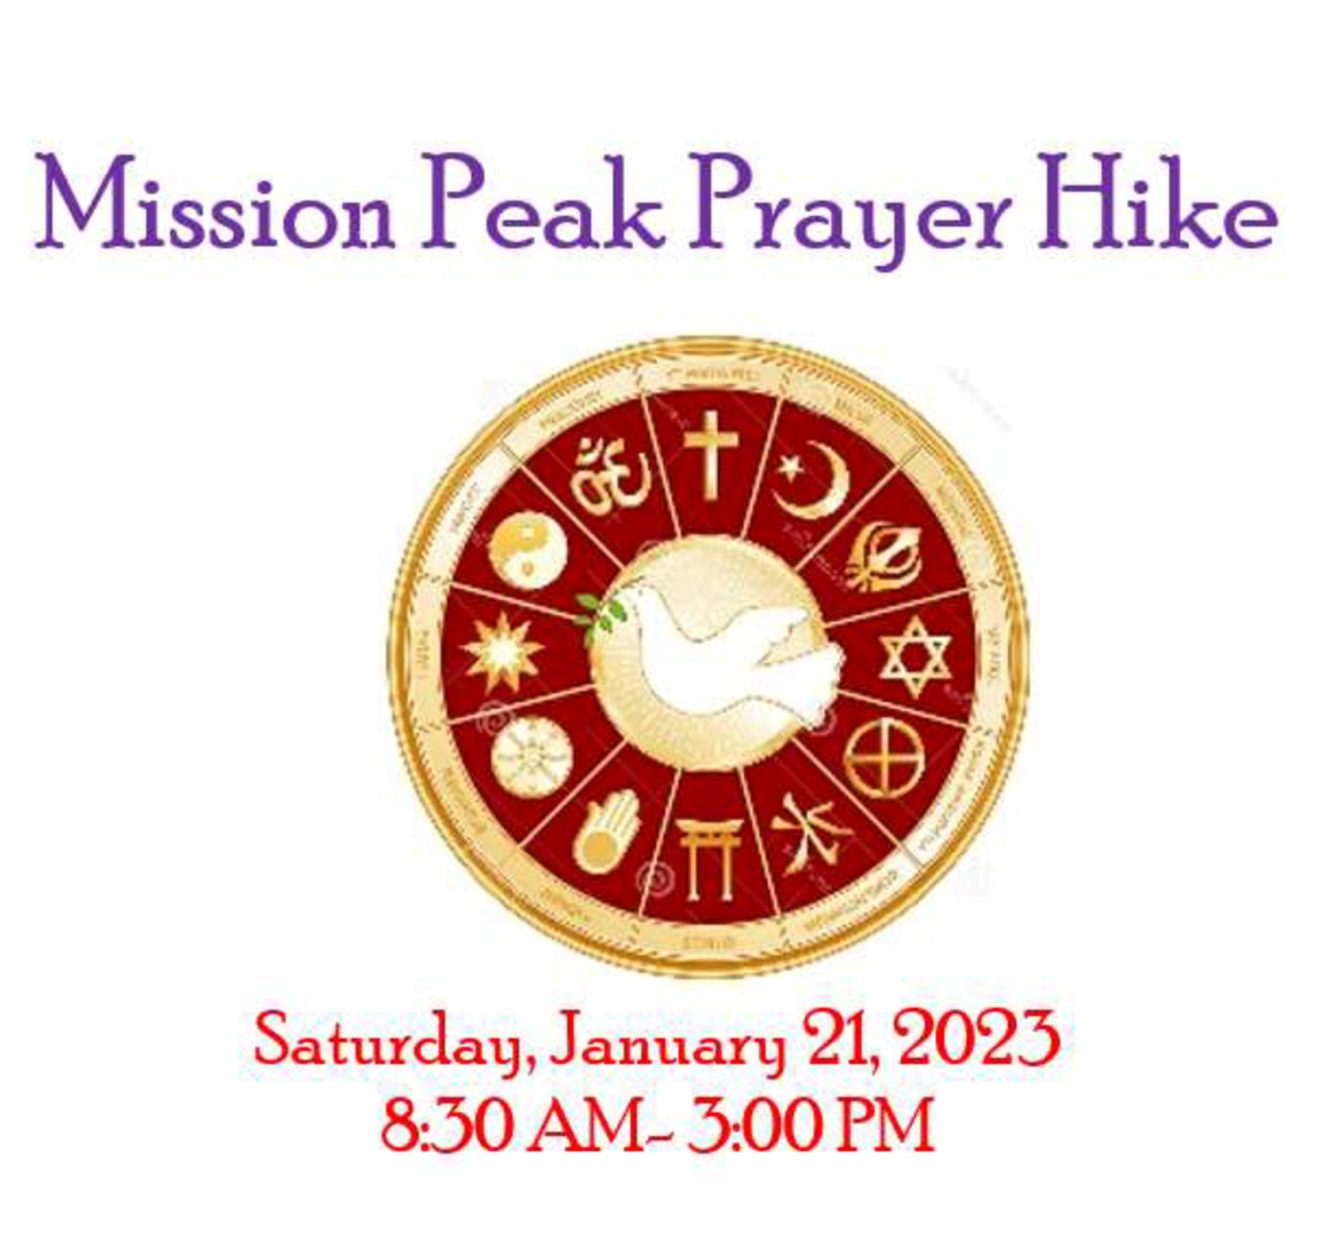 Mission Peak Prayer Hike 2023 was a success! 